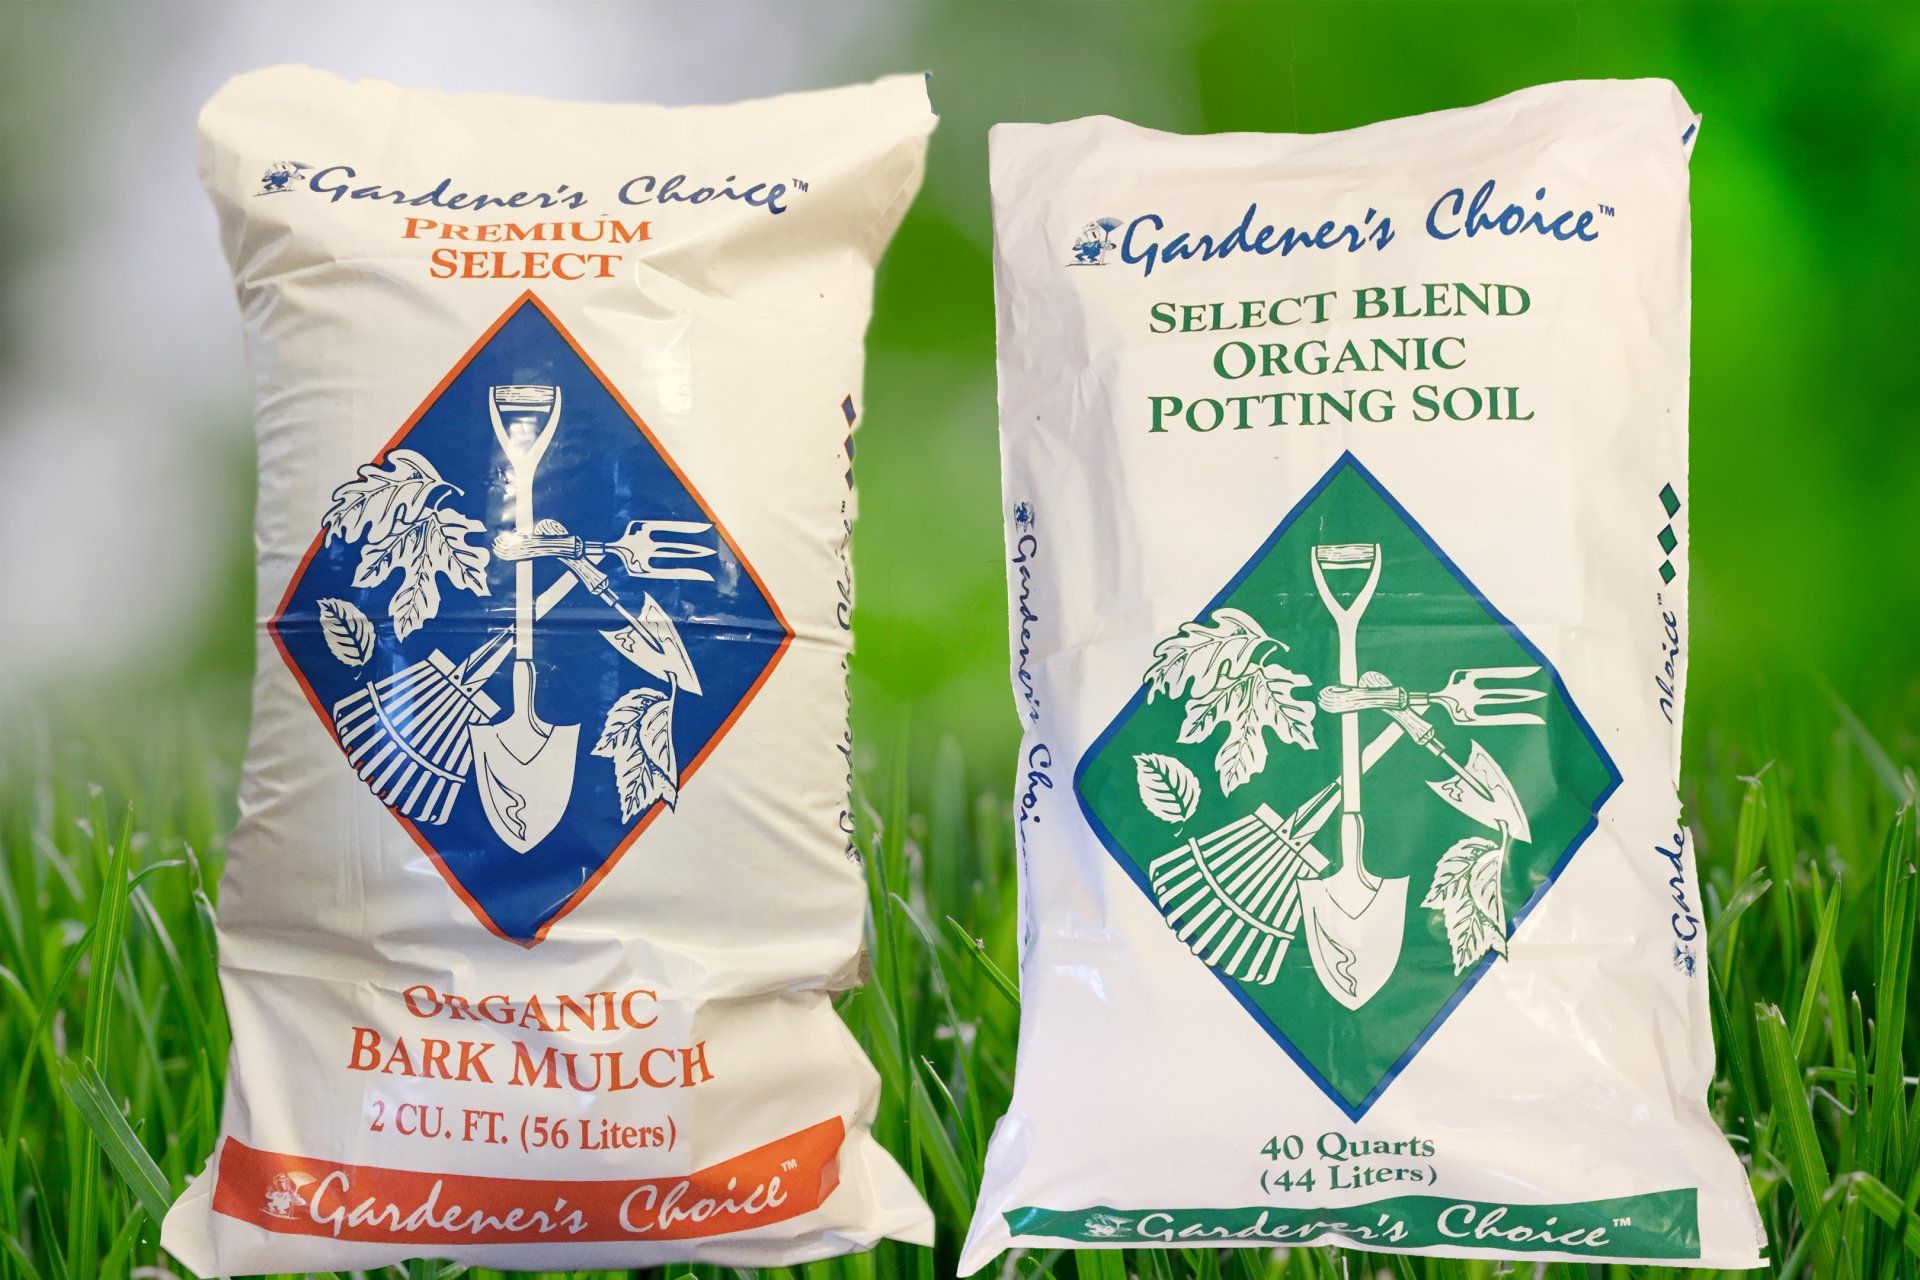 Two bags of gardener 's choice select blend organic potting soil